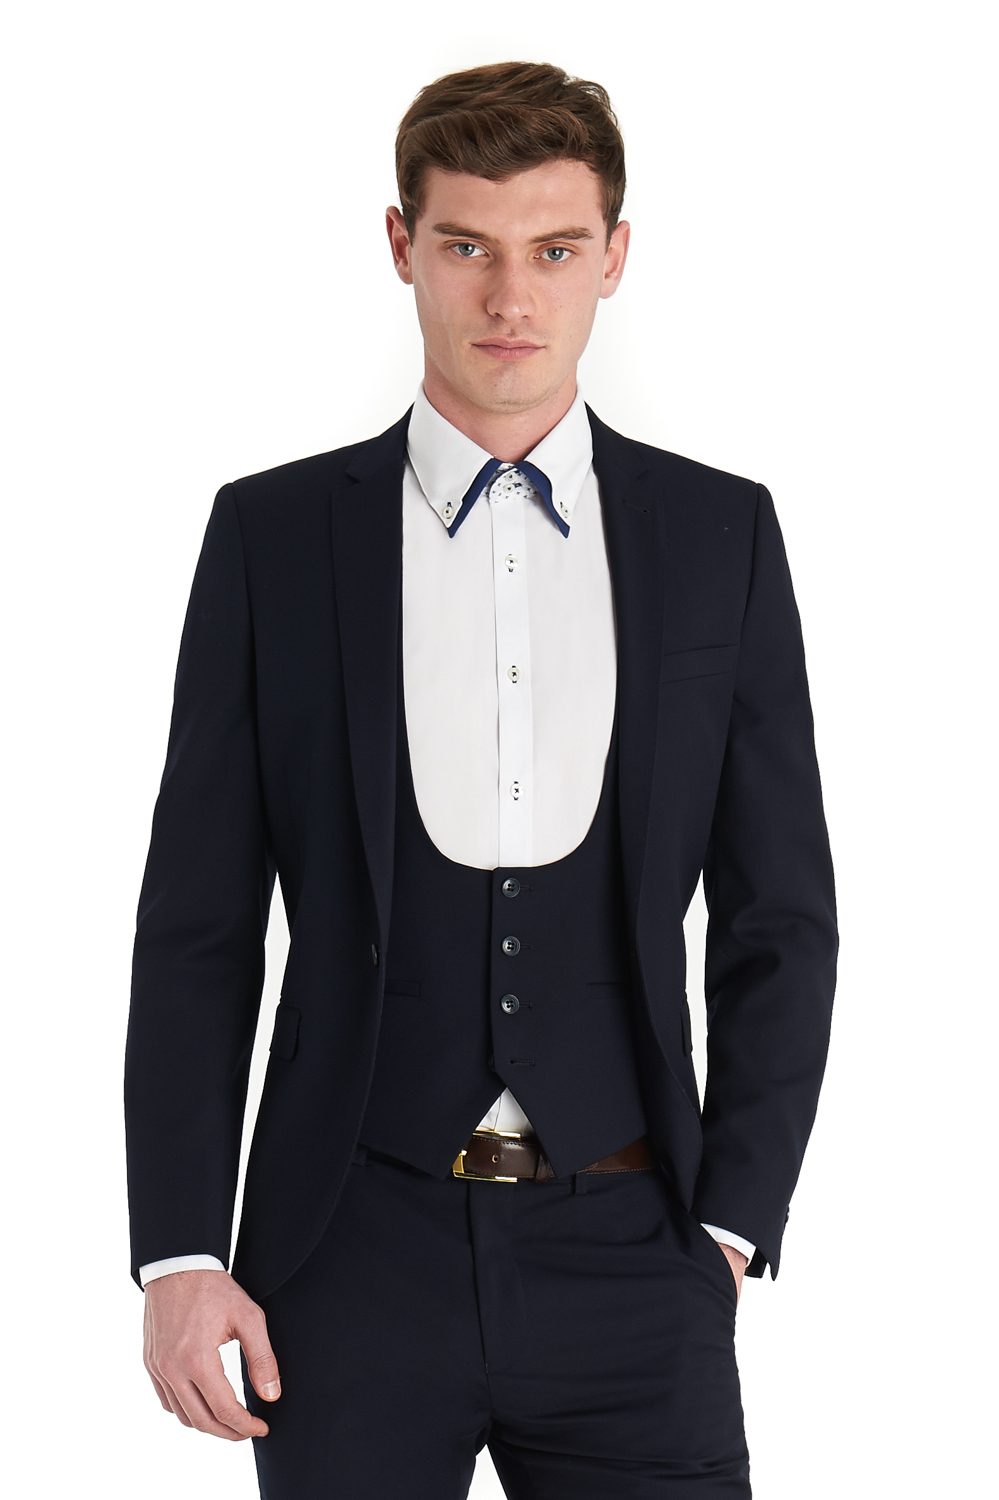 Groom suit2 - مدل های کت و شلوار دامادی به همراه راهنمای خرید